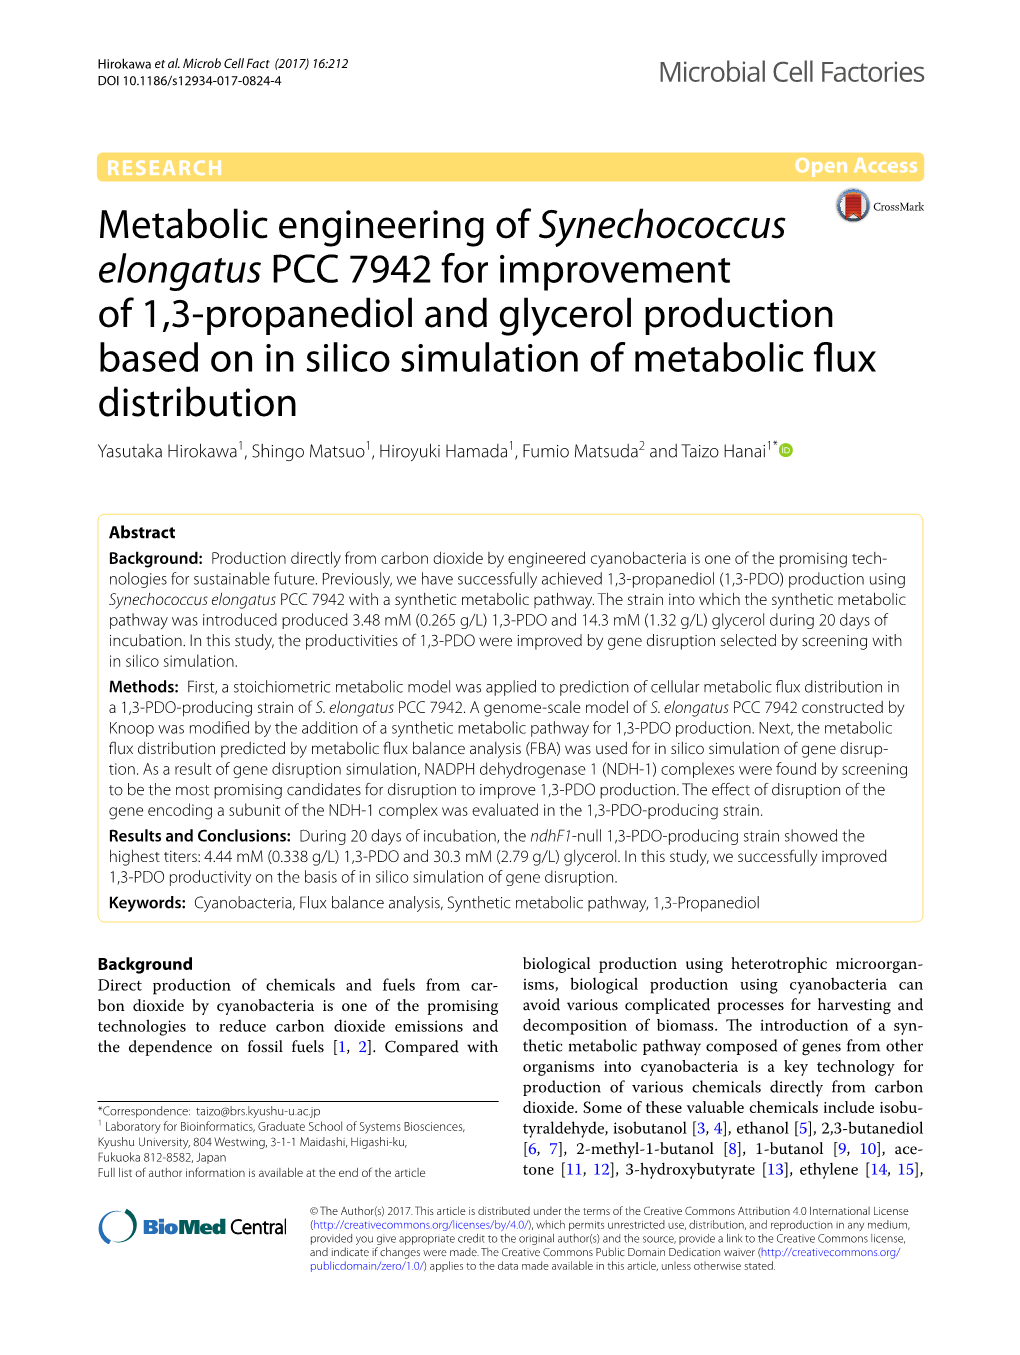 Metabolic Engineering of Synechococcus Elongatus PCC